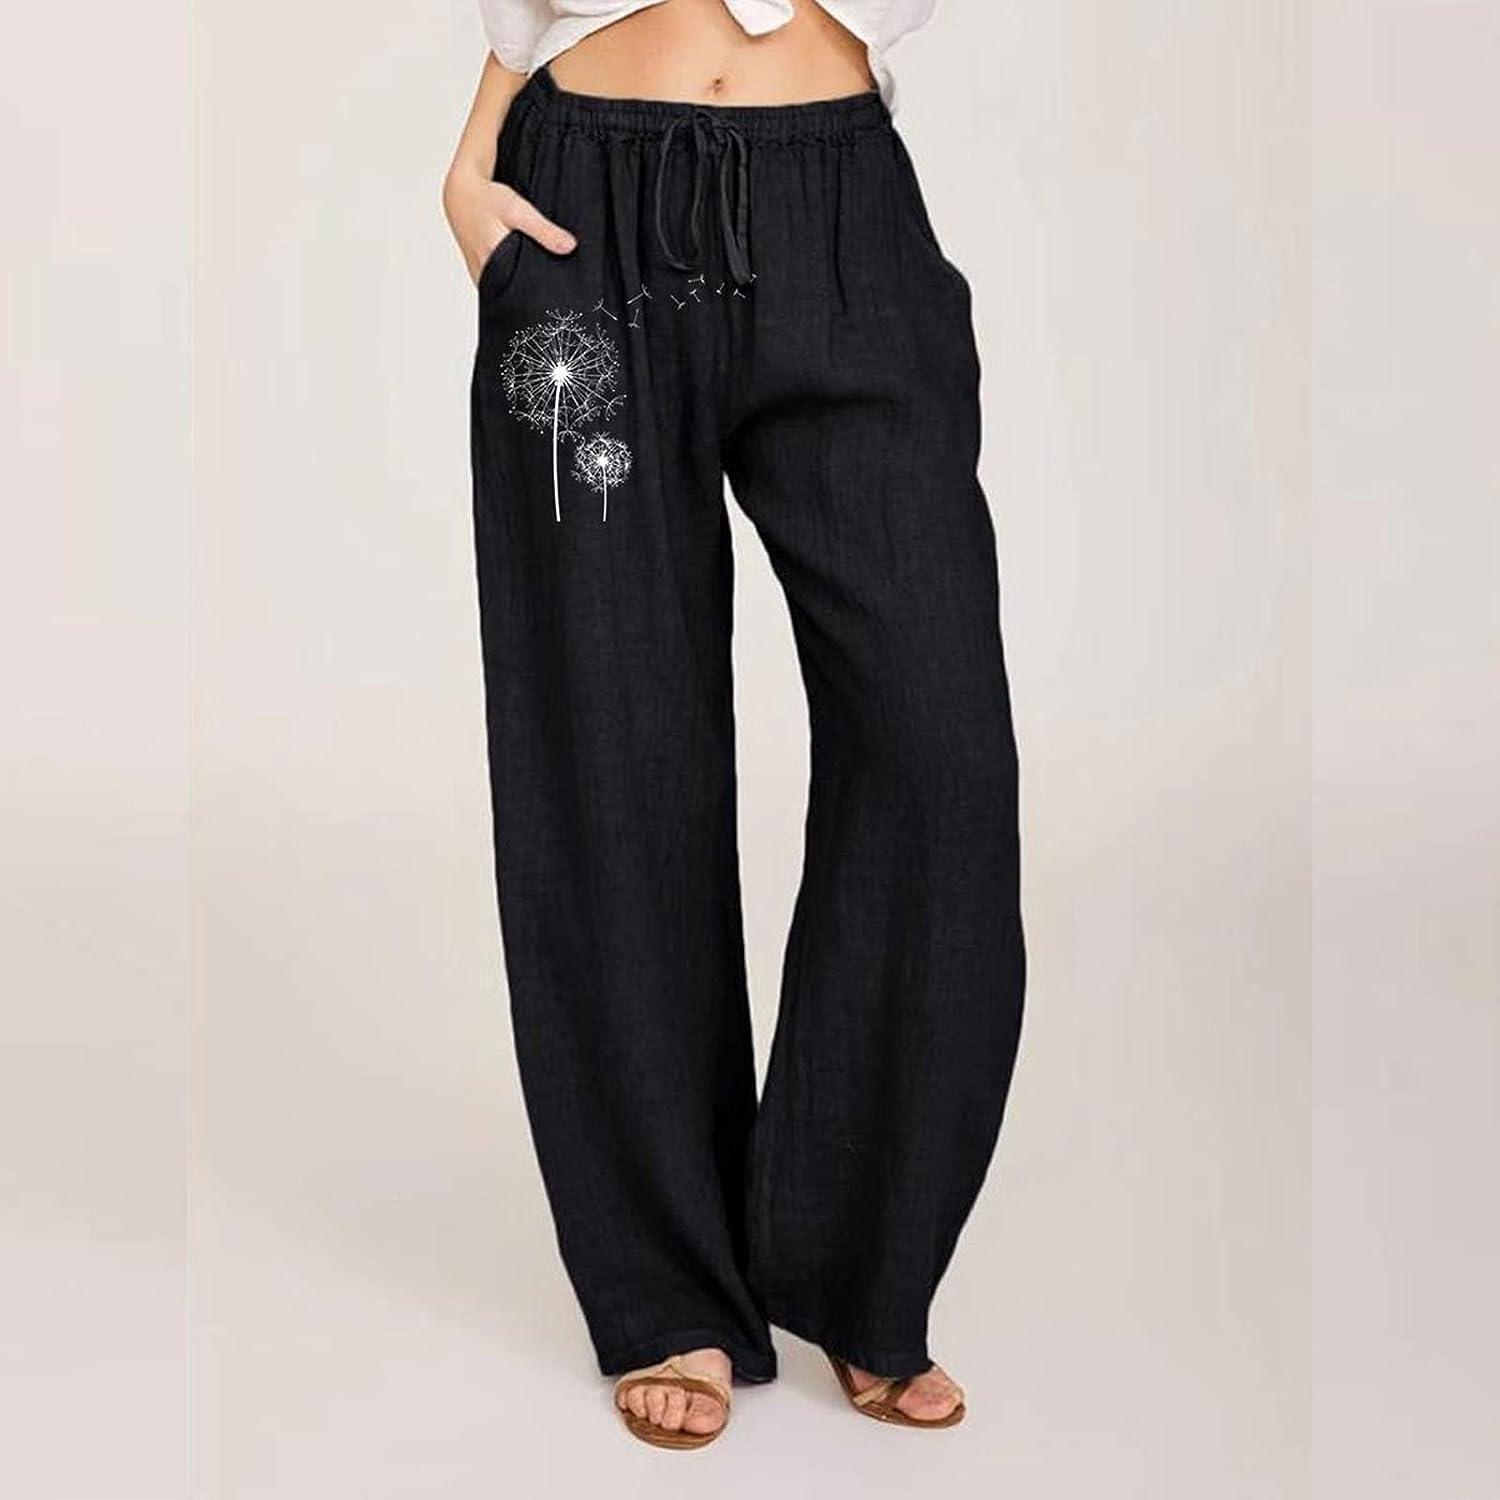 BECLOTH Cotton linen Pants For Women Tightness Trousers Pocket Casual Plus  Size Pants 